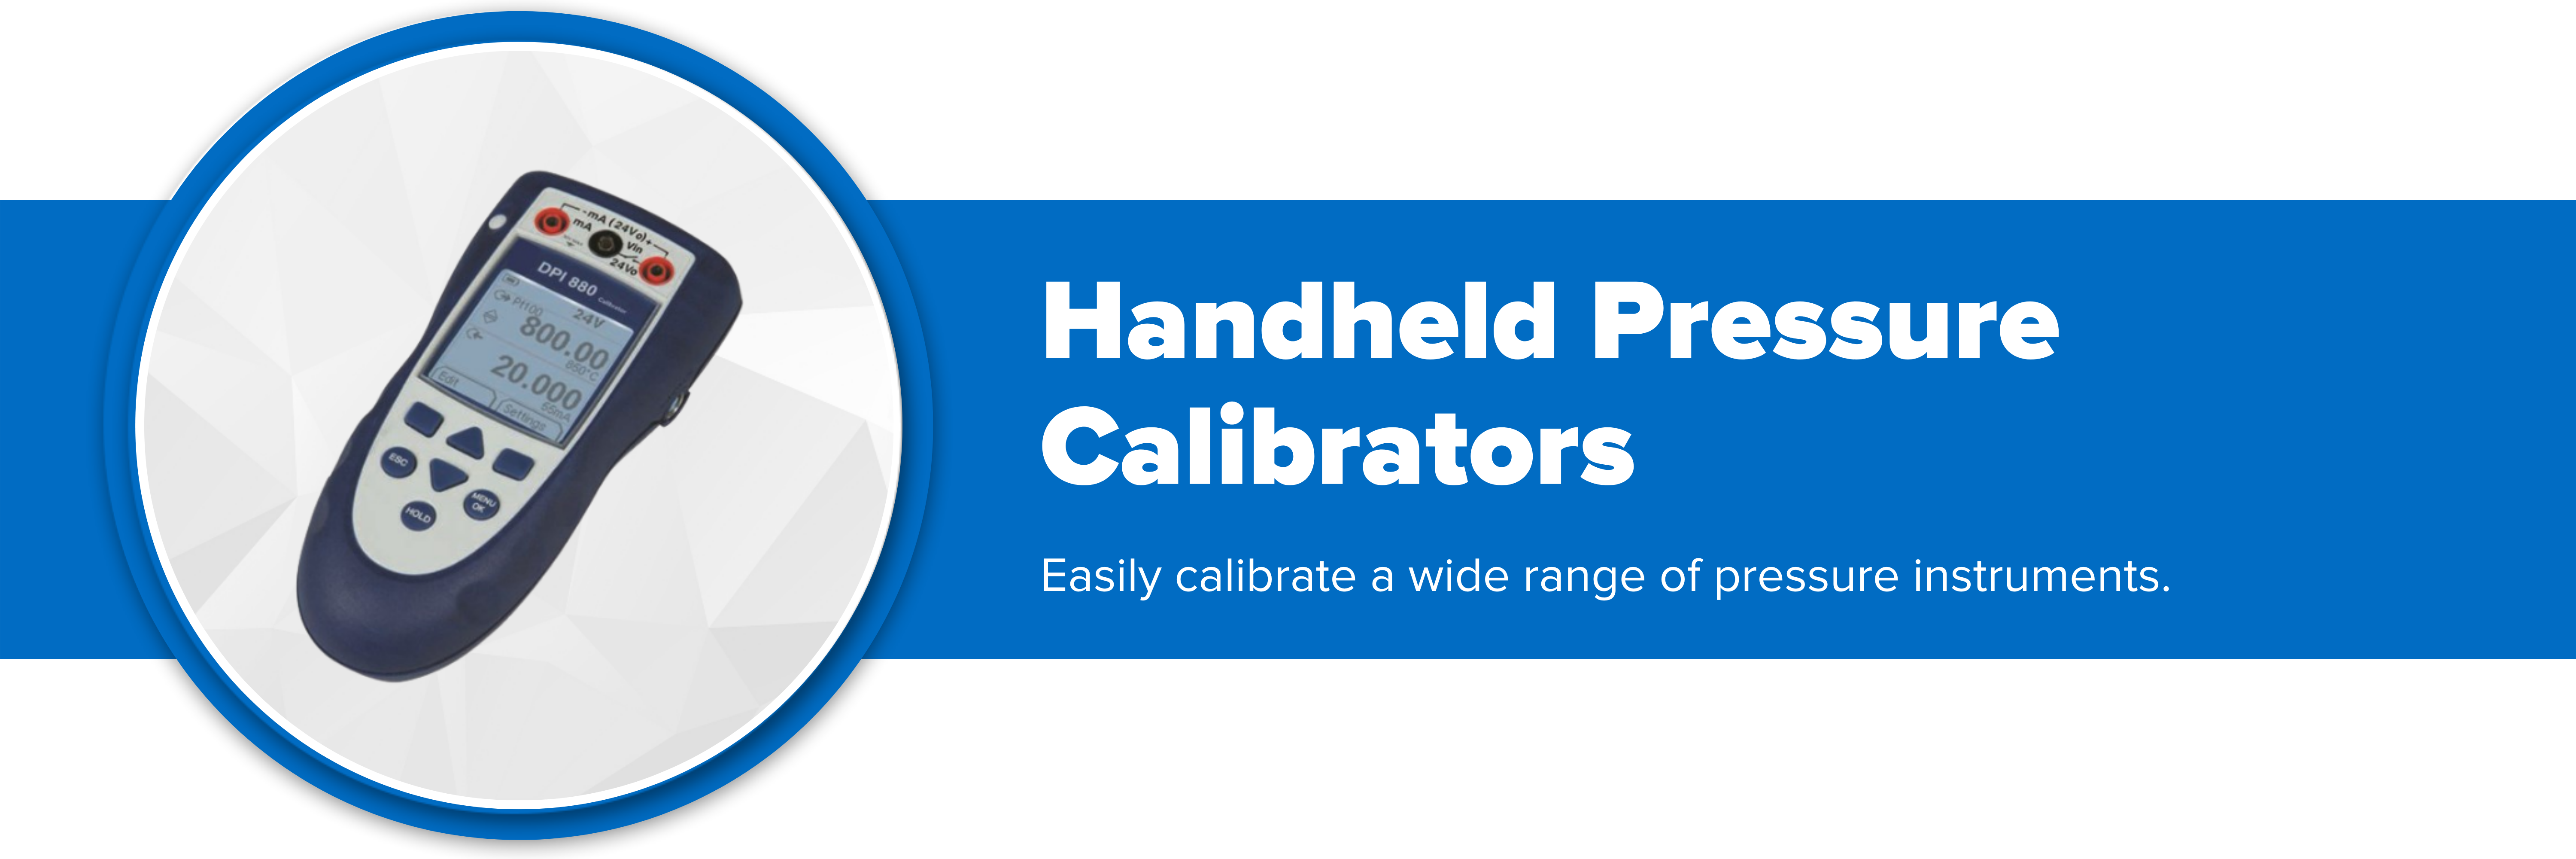 Header image with text "Handheld Calibrators"